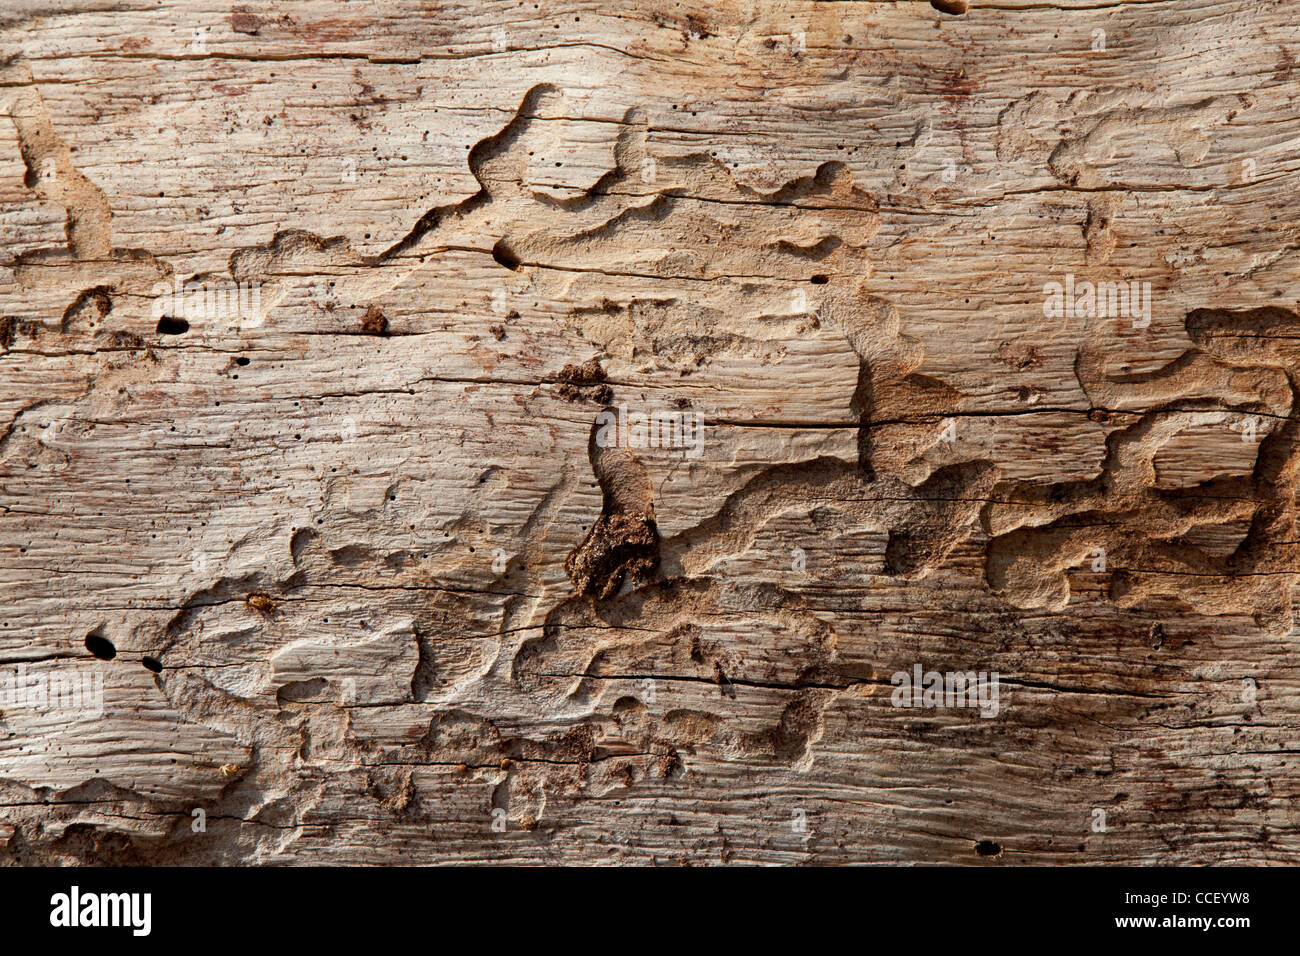 Close-up shot of wood grain pattern Stock Photo